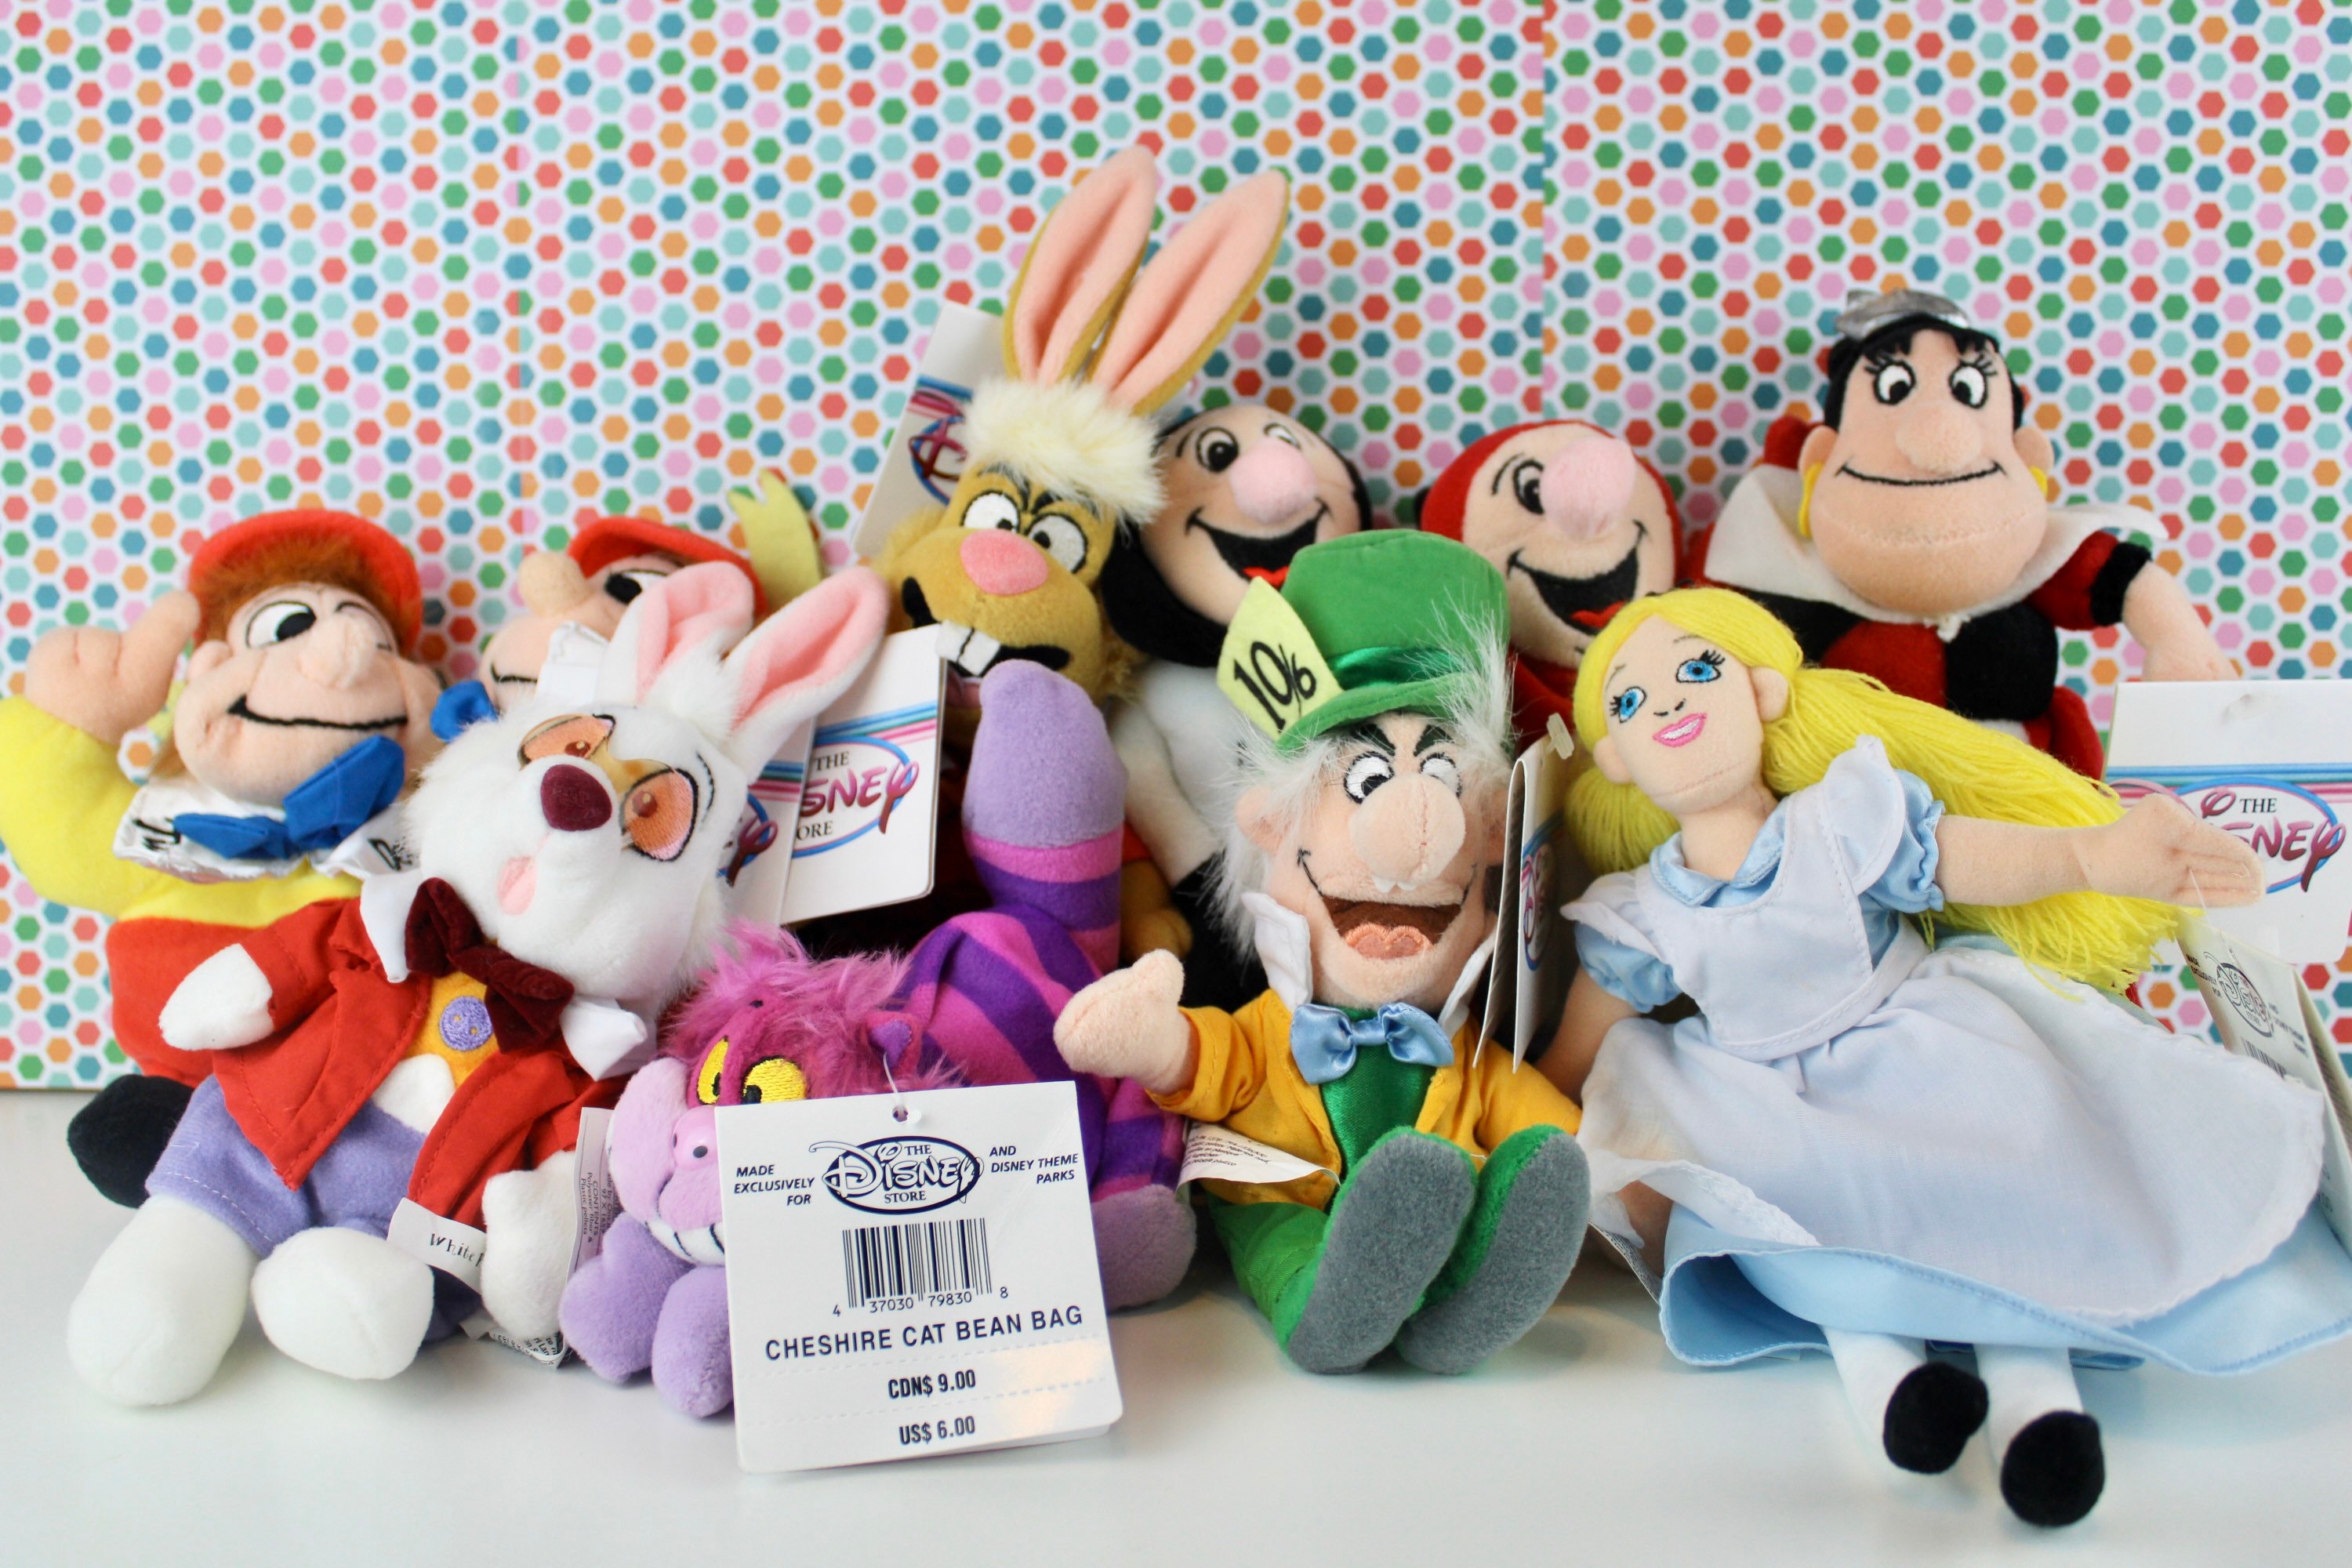 Disney Alice in Wonderland Retired Bean Bag Queen of Hearts Plush Toy for sale online 